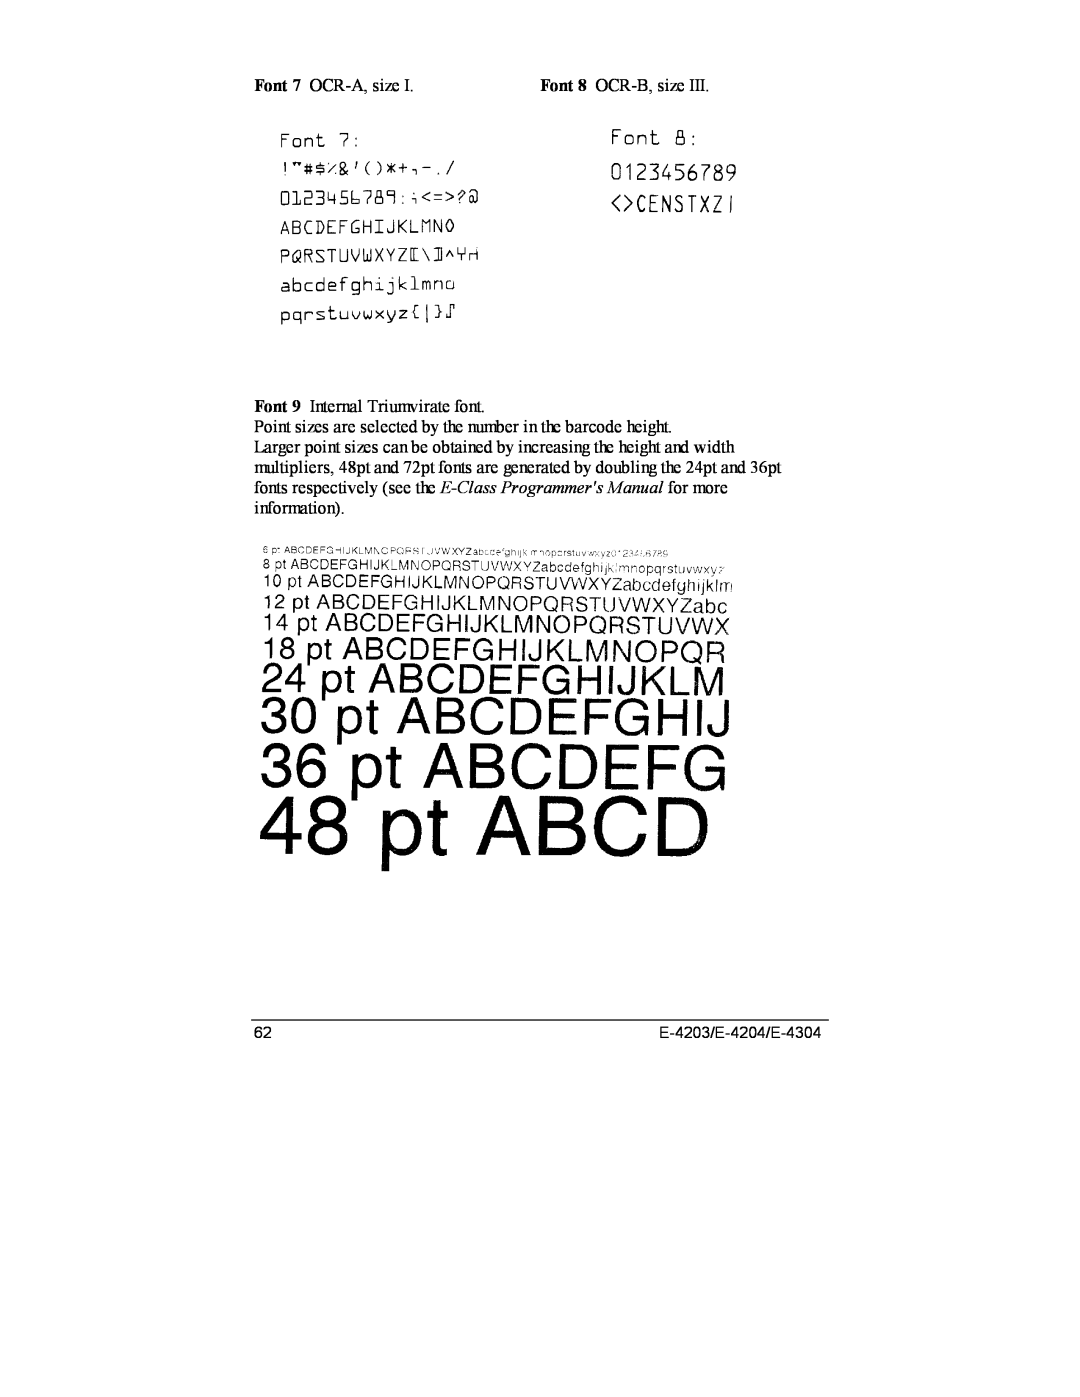 Datamax E-4304e manual Font 7 OCR-A, size, Font 8 OCR-B, size, Font 9 Internal Triumvirate font, E-4203/E-4204/E-4304 